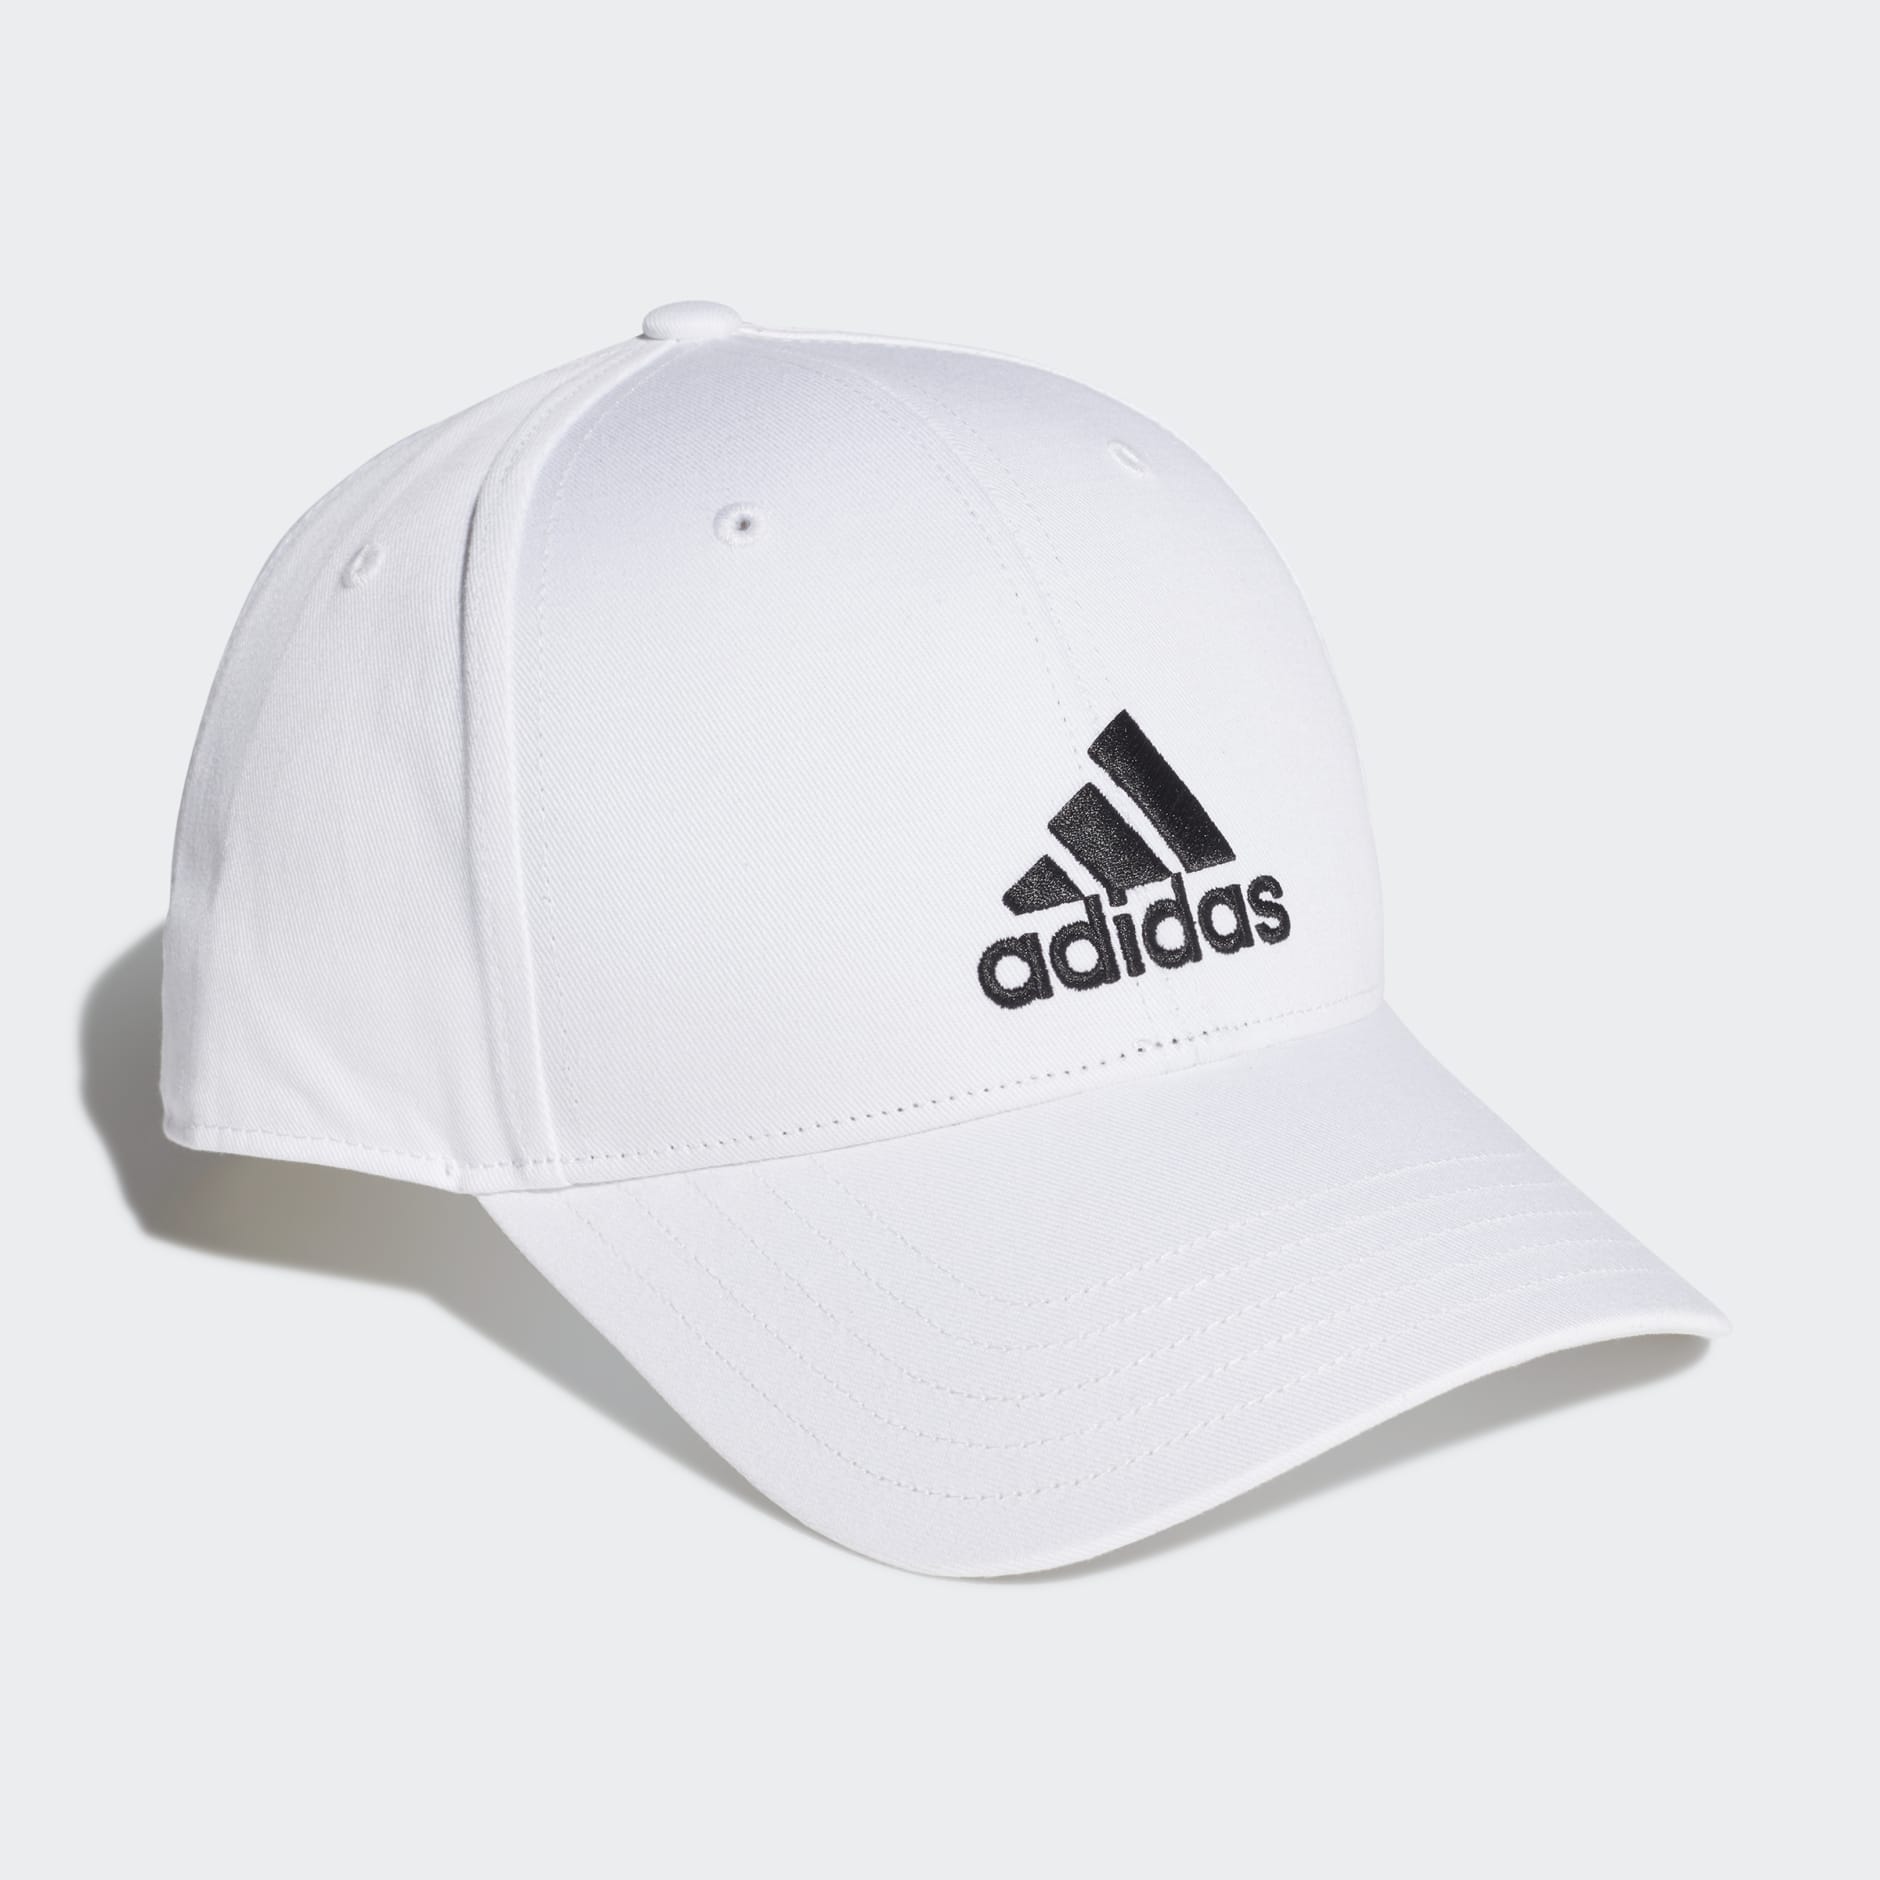 adidas COTTON BASEBALL CAP - White | adidas UAE